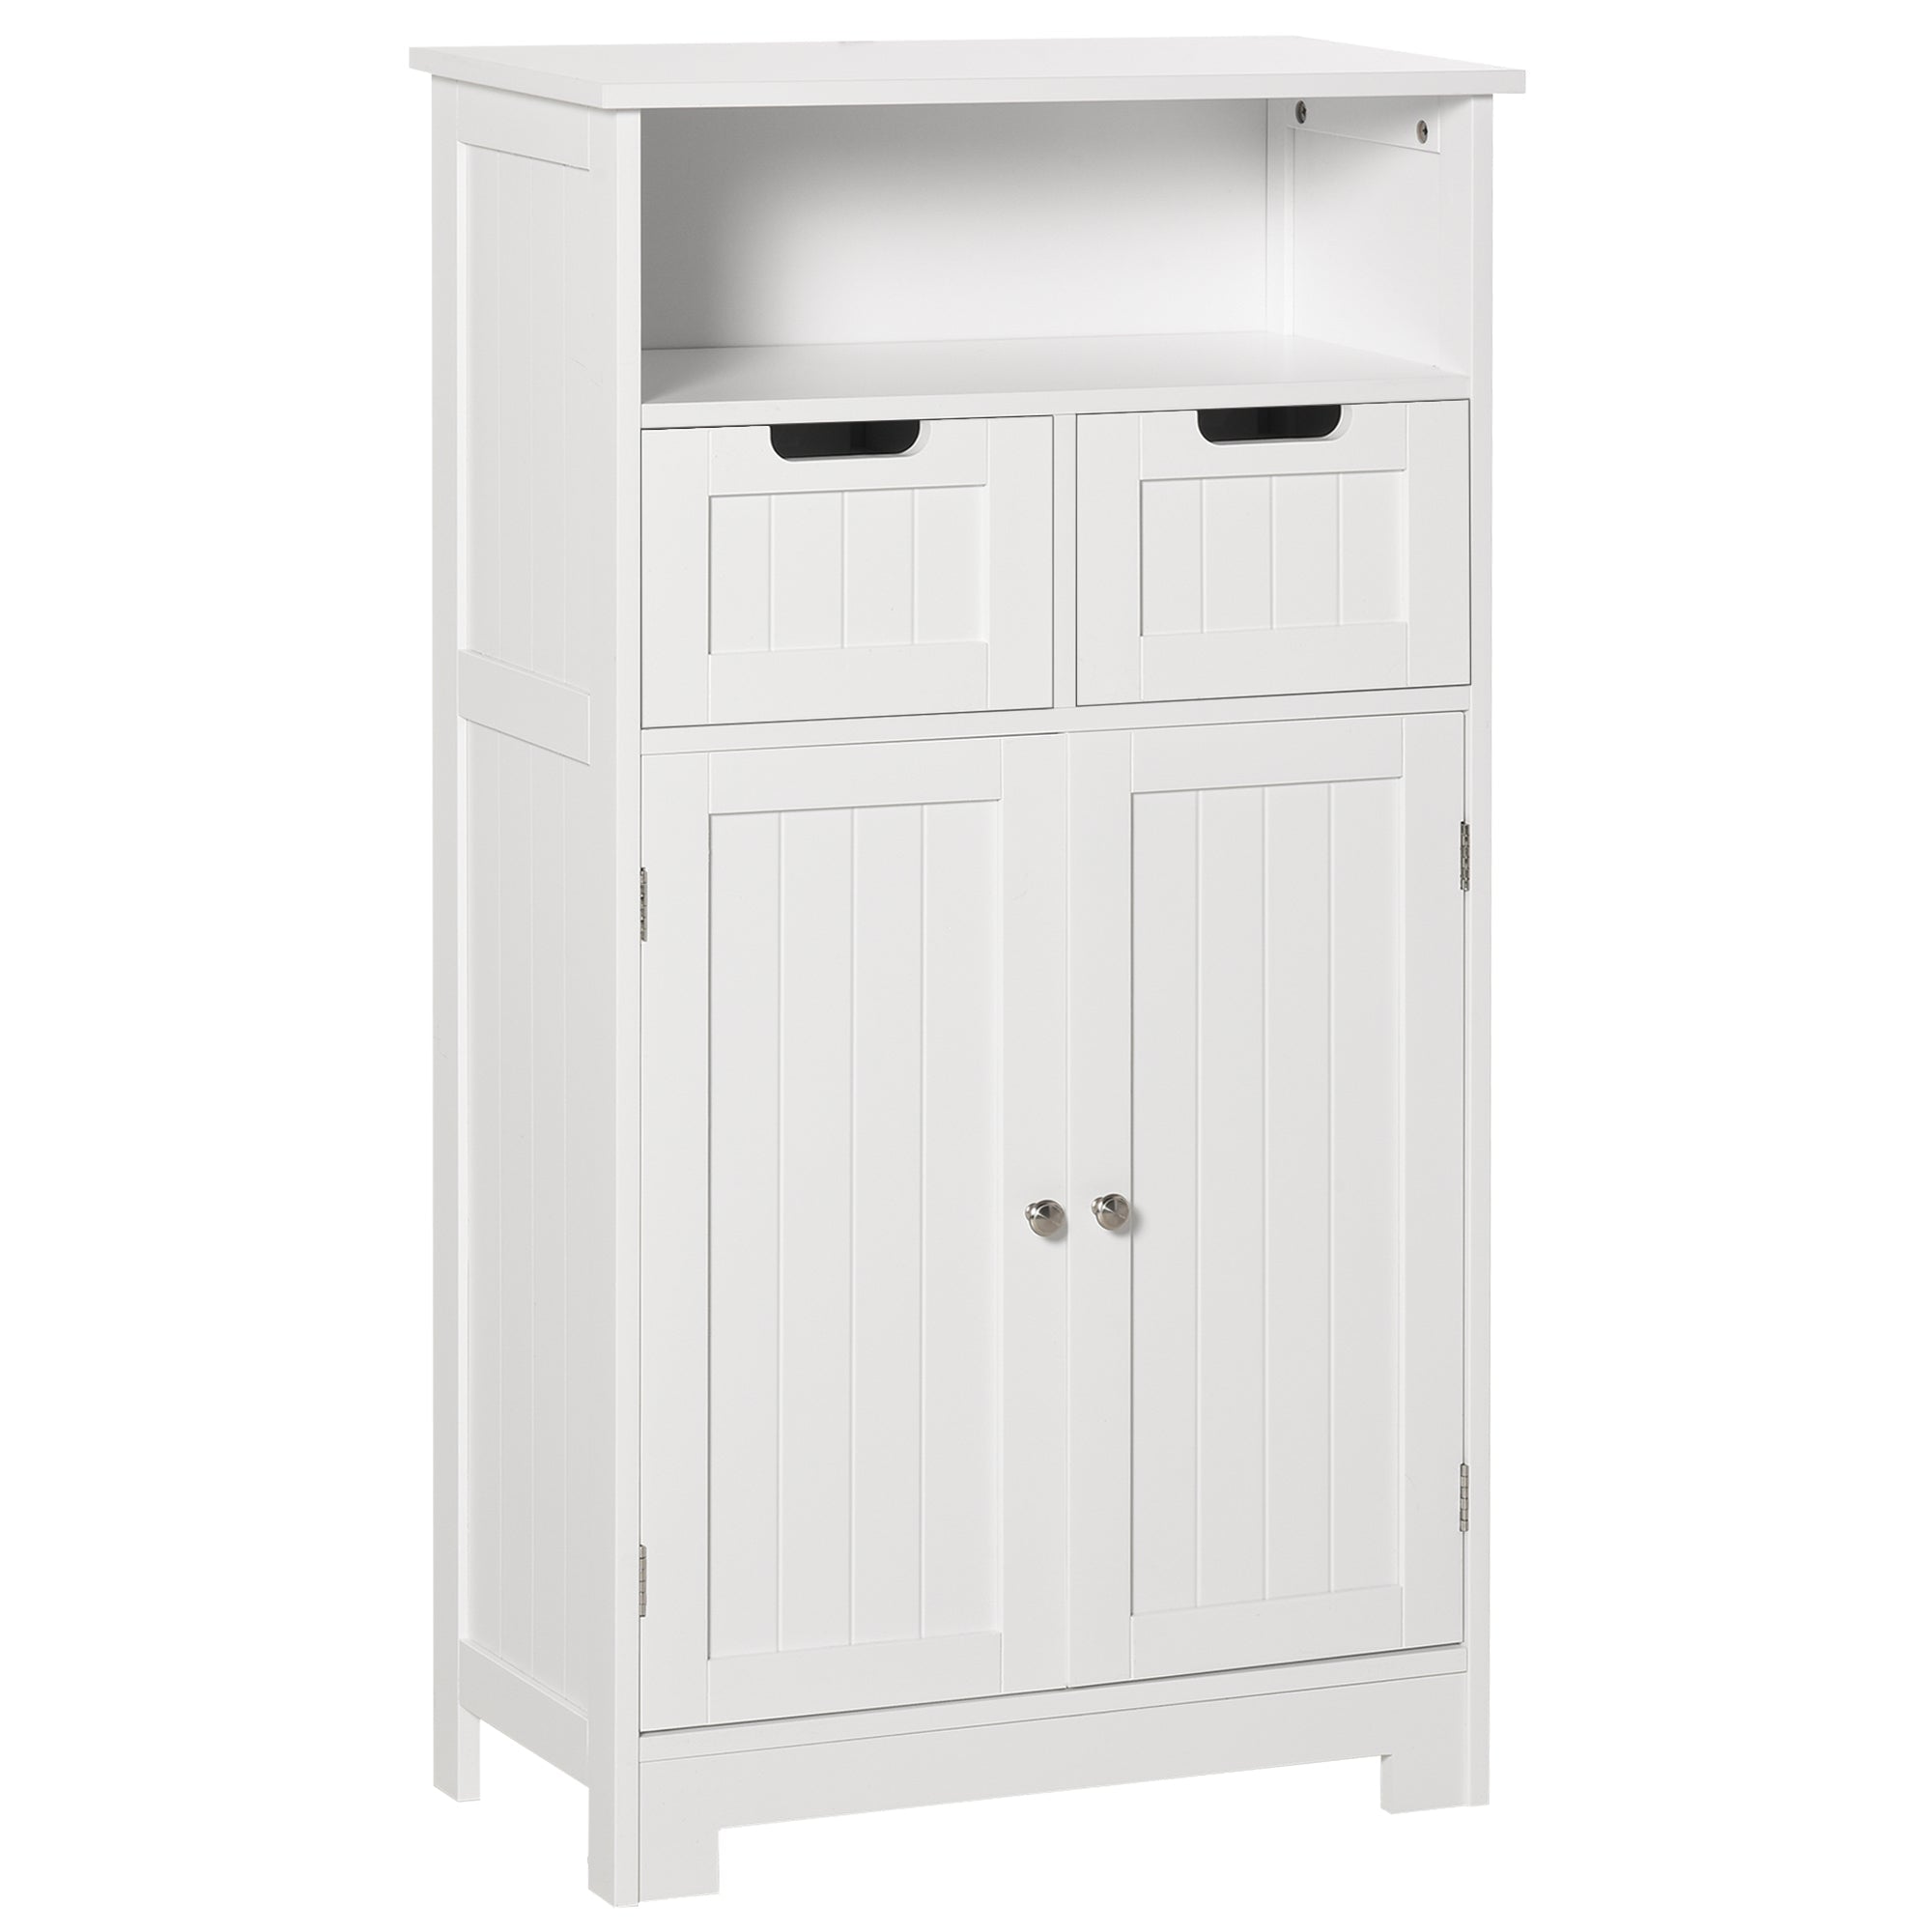 Freestanding Bathroom Cabinet, Narrow Freestanding Unit, Storage Cupboard Organizer with 2 Drawer Adjustable Shelf, White-0